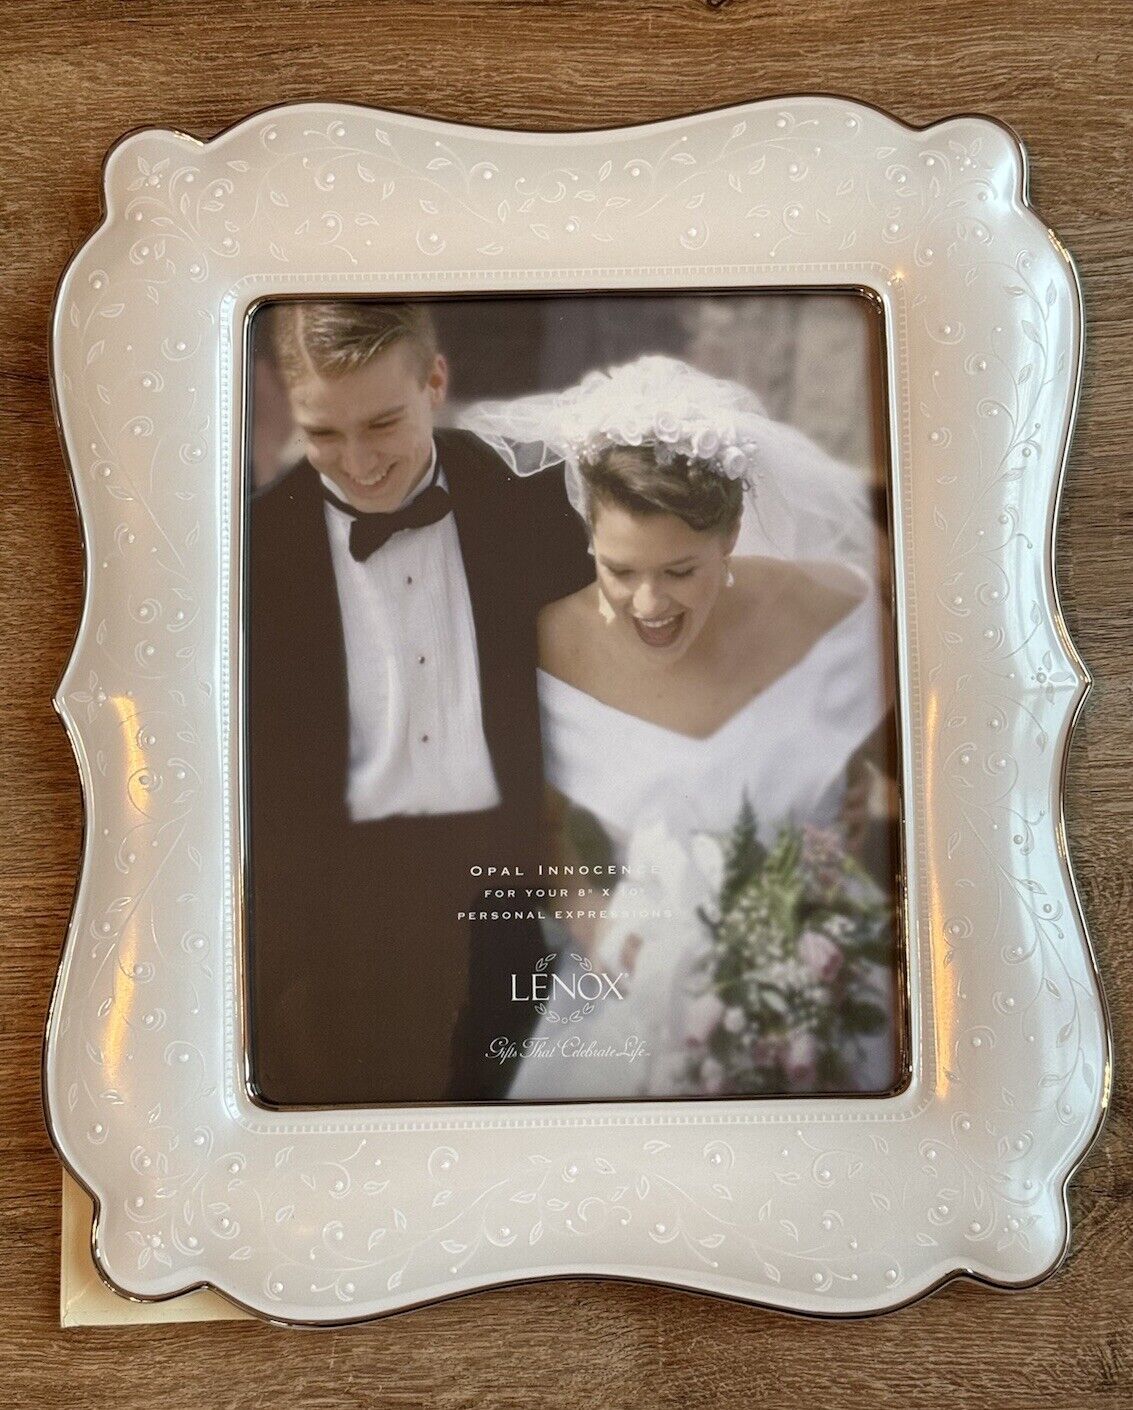 Lenox Opal Innocence 8x10 Inch Platinum Trim Wedding Photo Frame